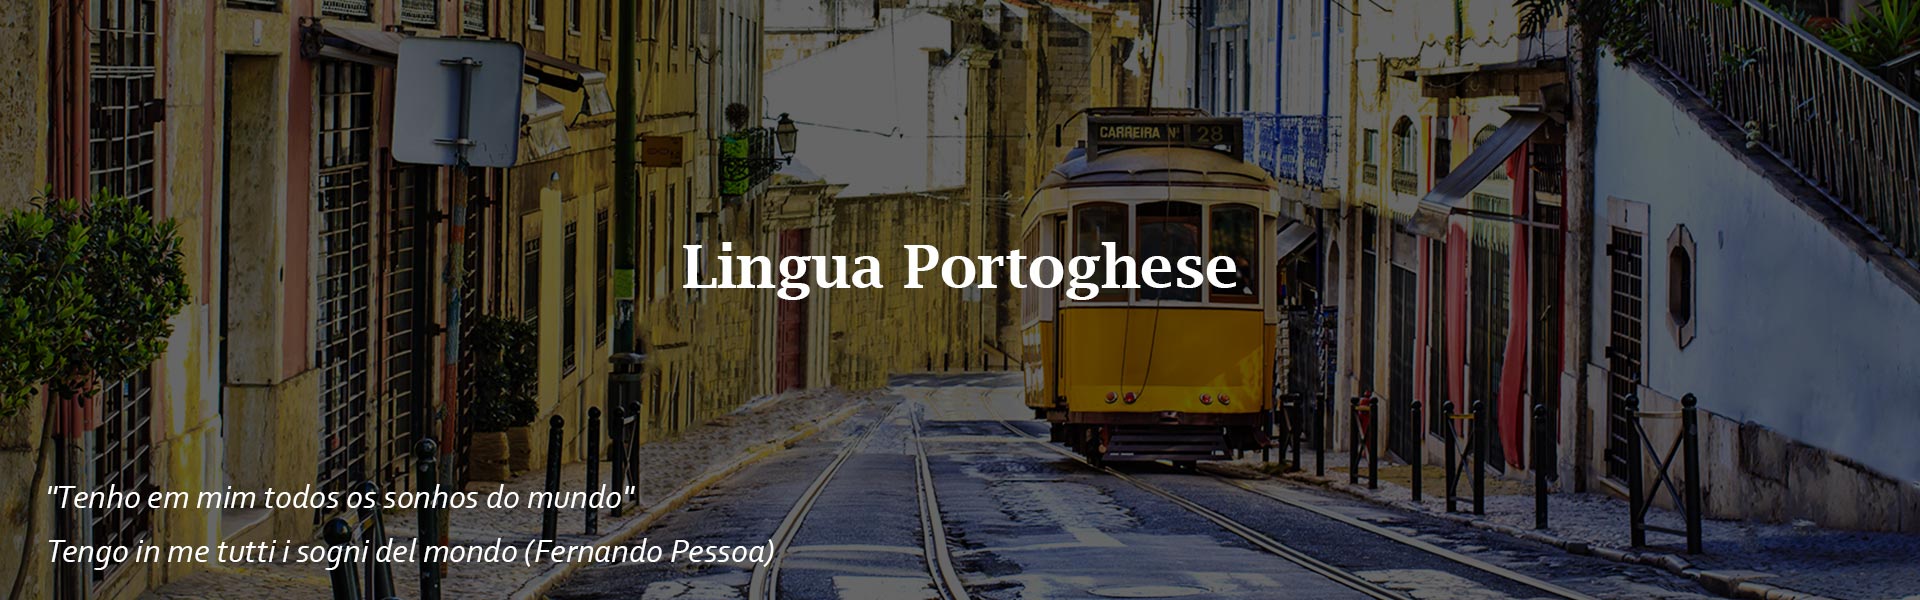 lingua-Portoghese-Alif